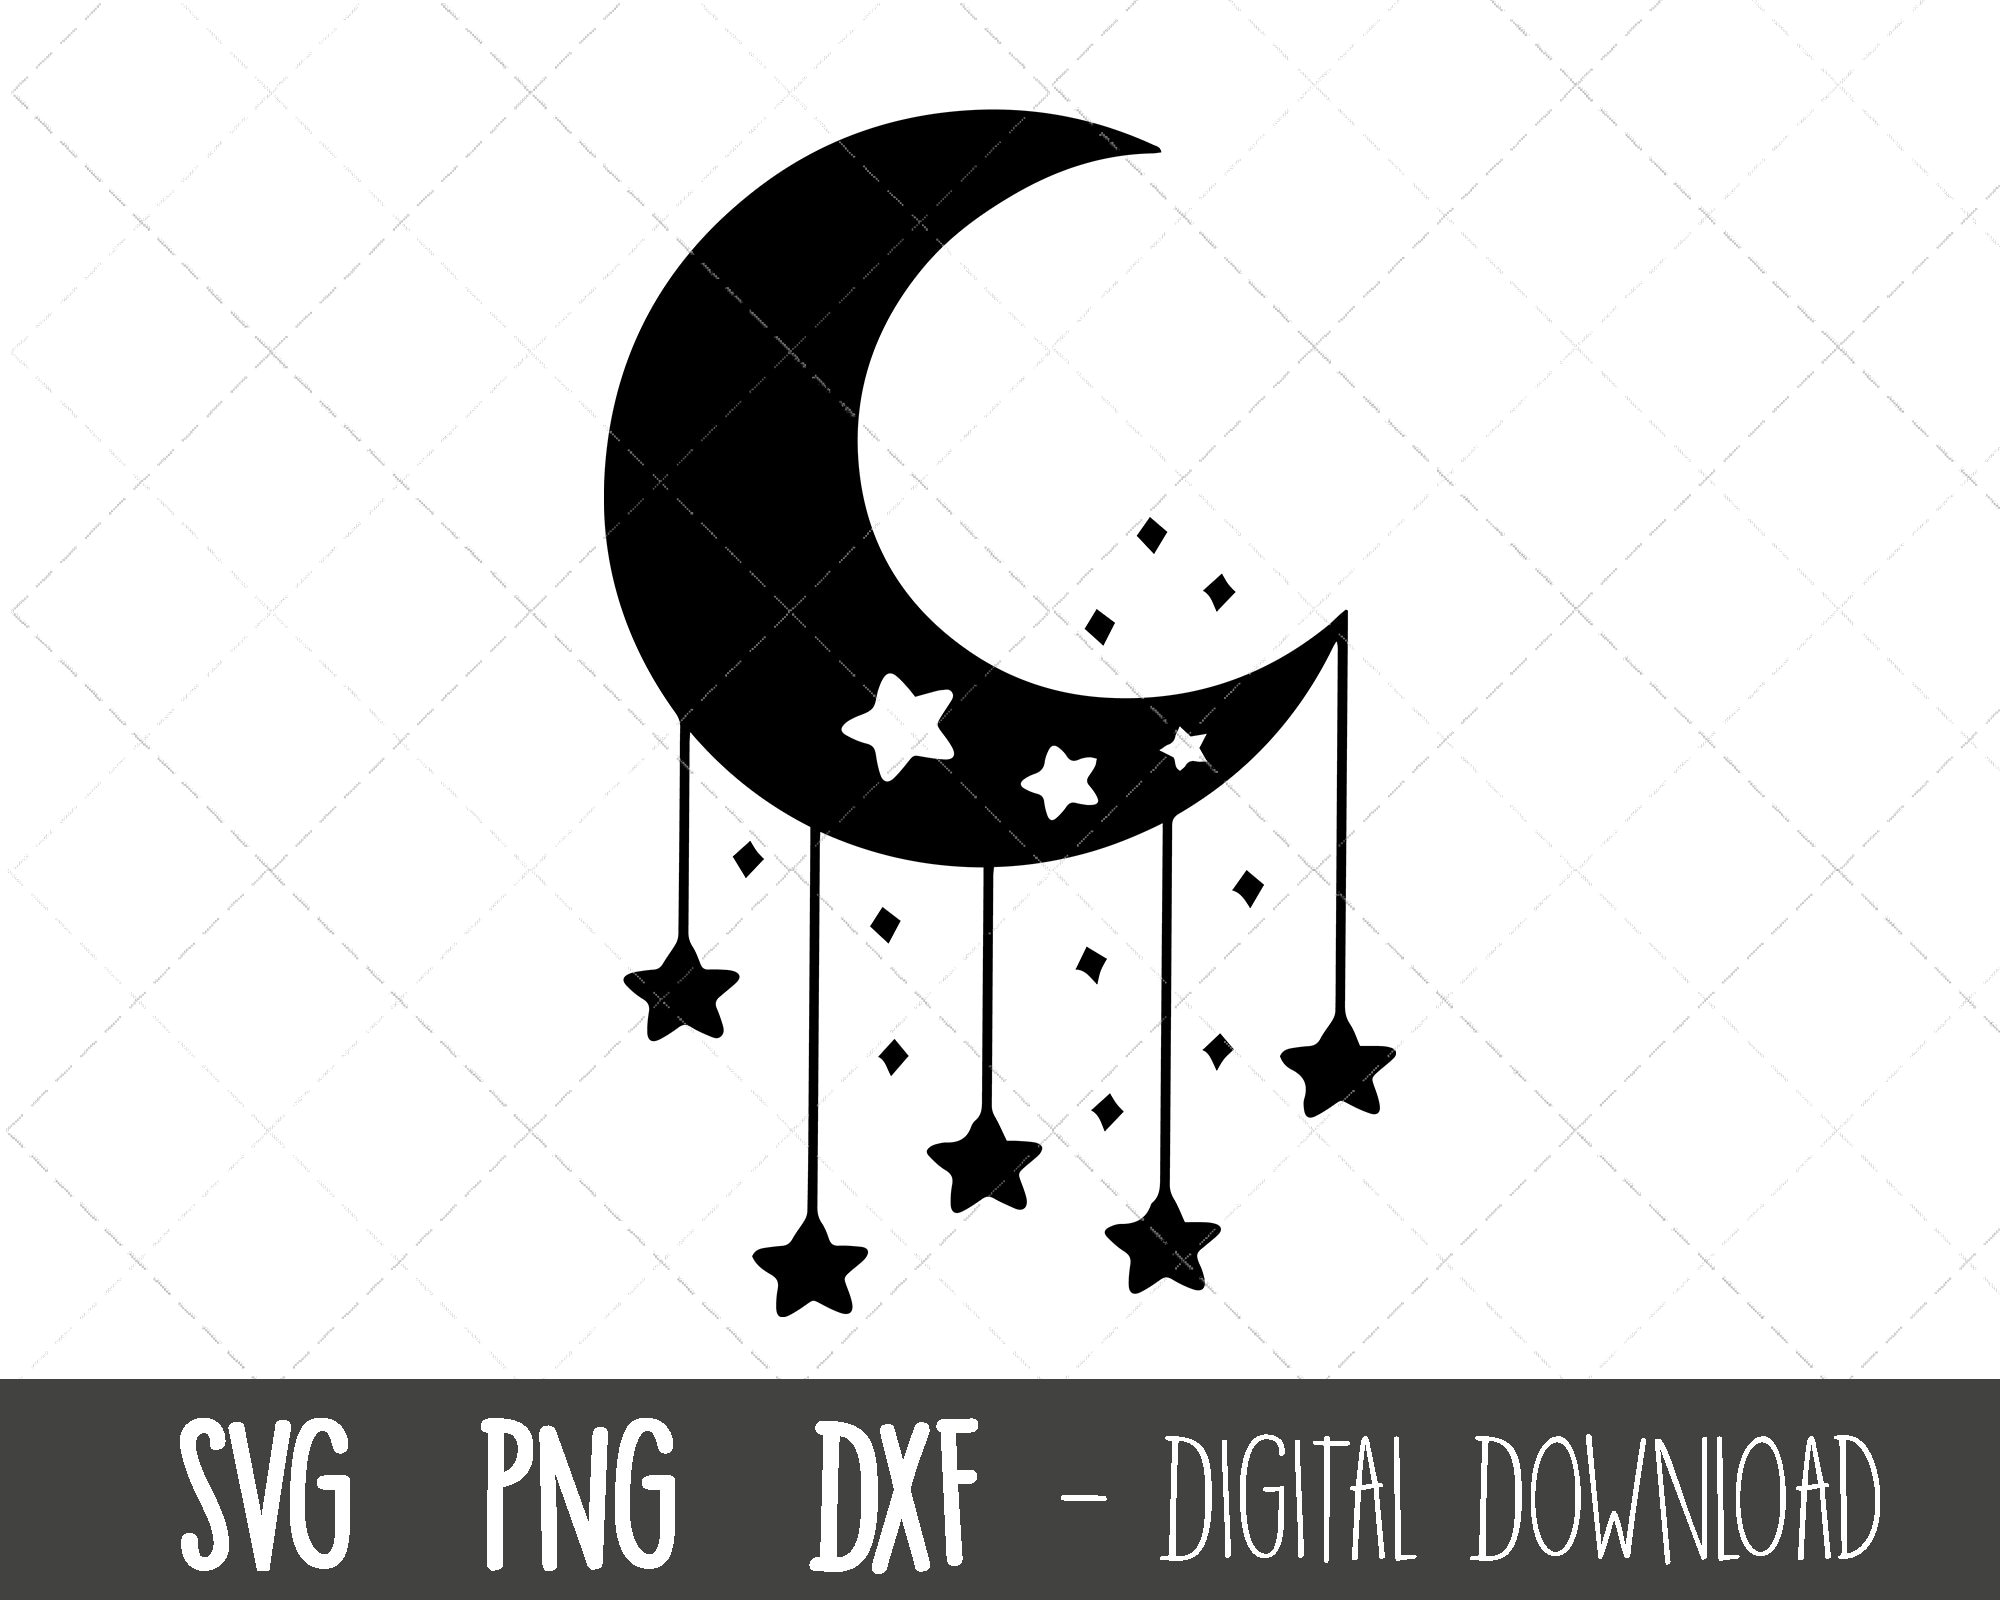 Free Moon SVG, PNG Icon, Symbol. Download Image.